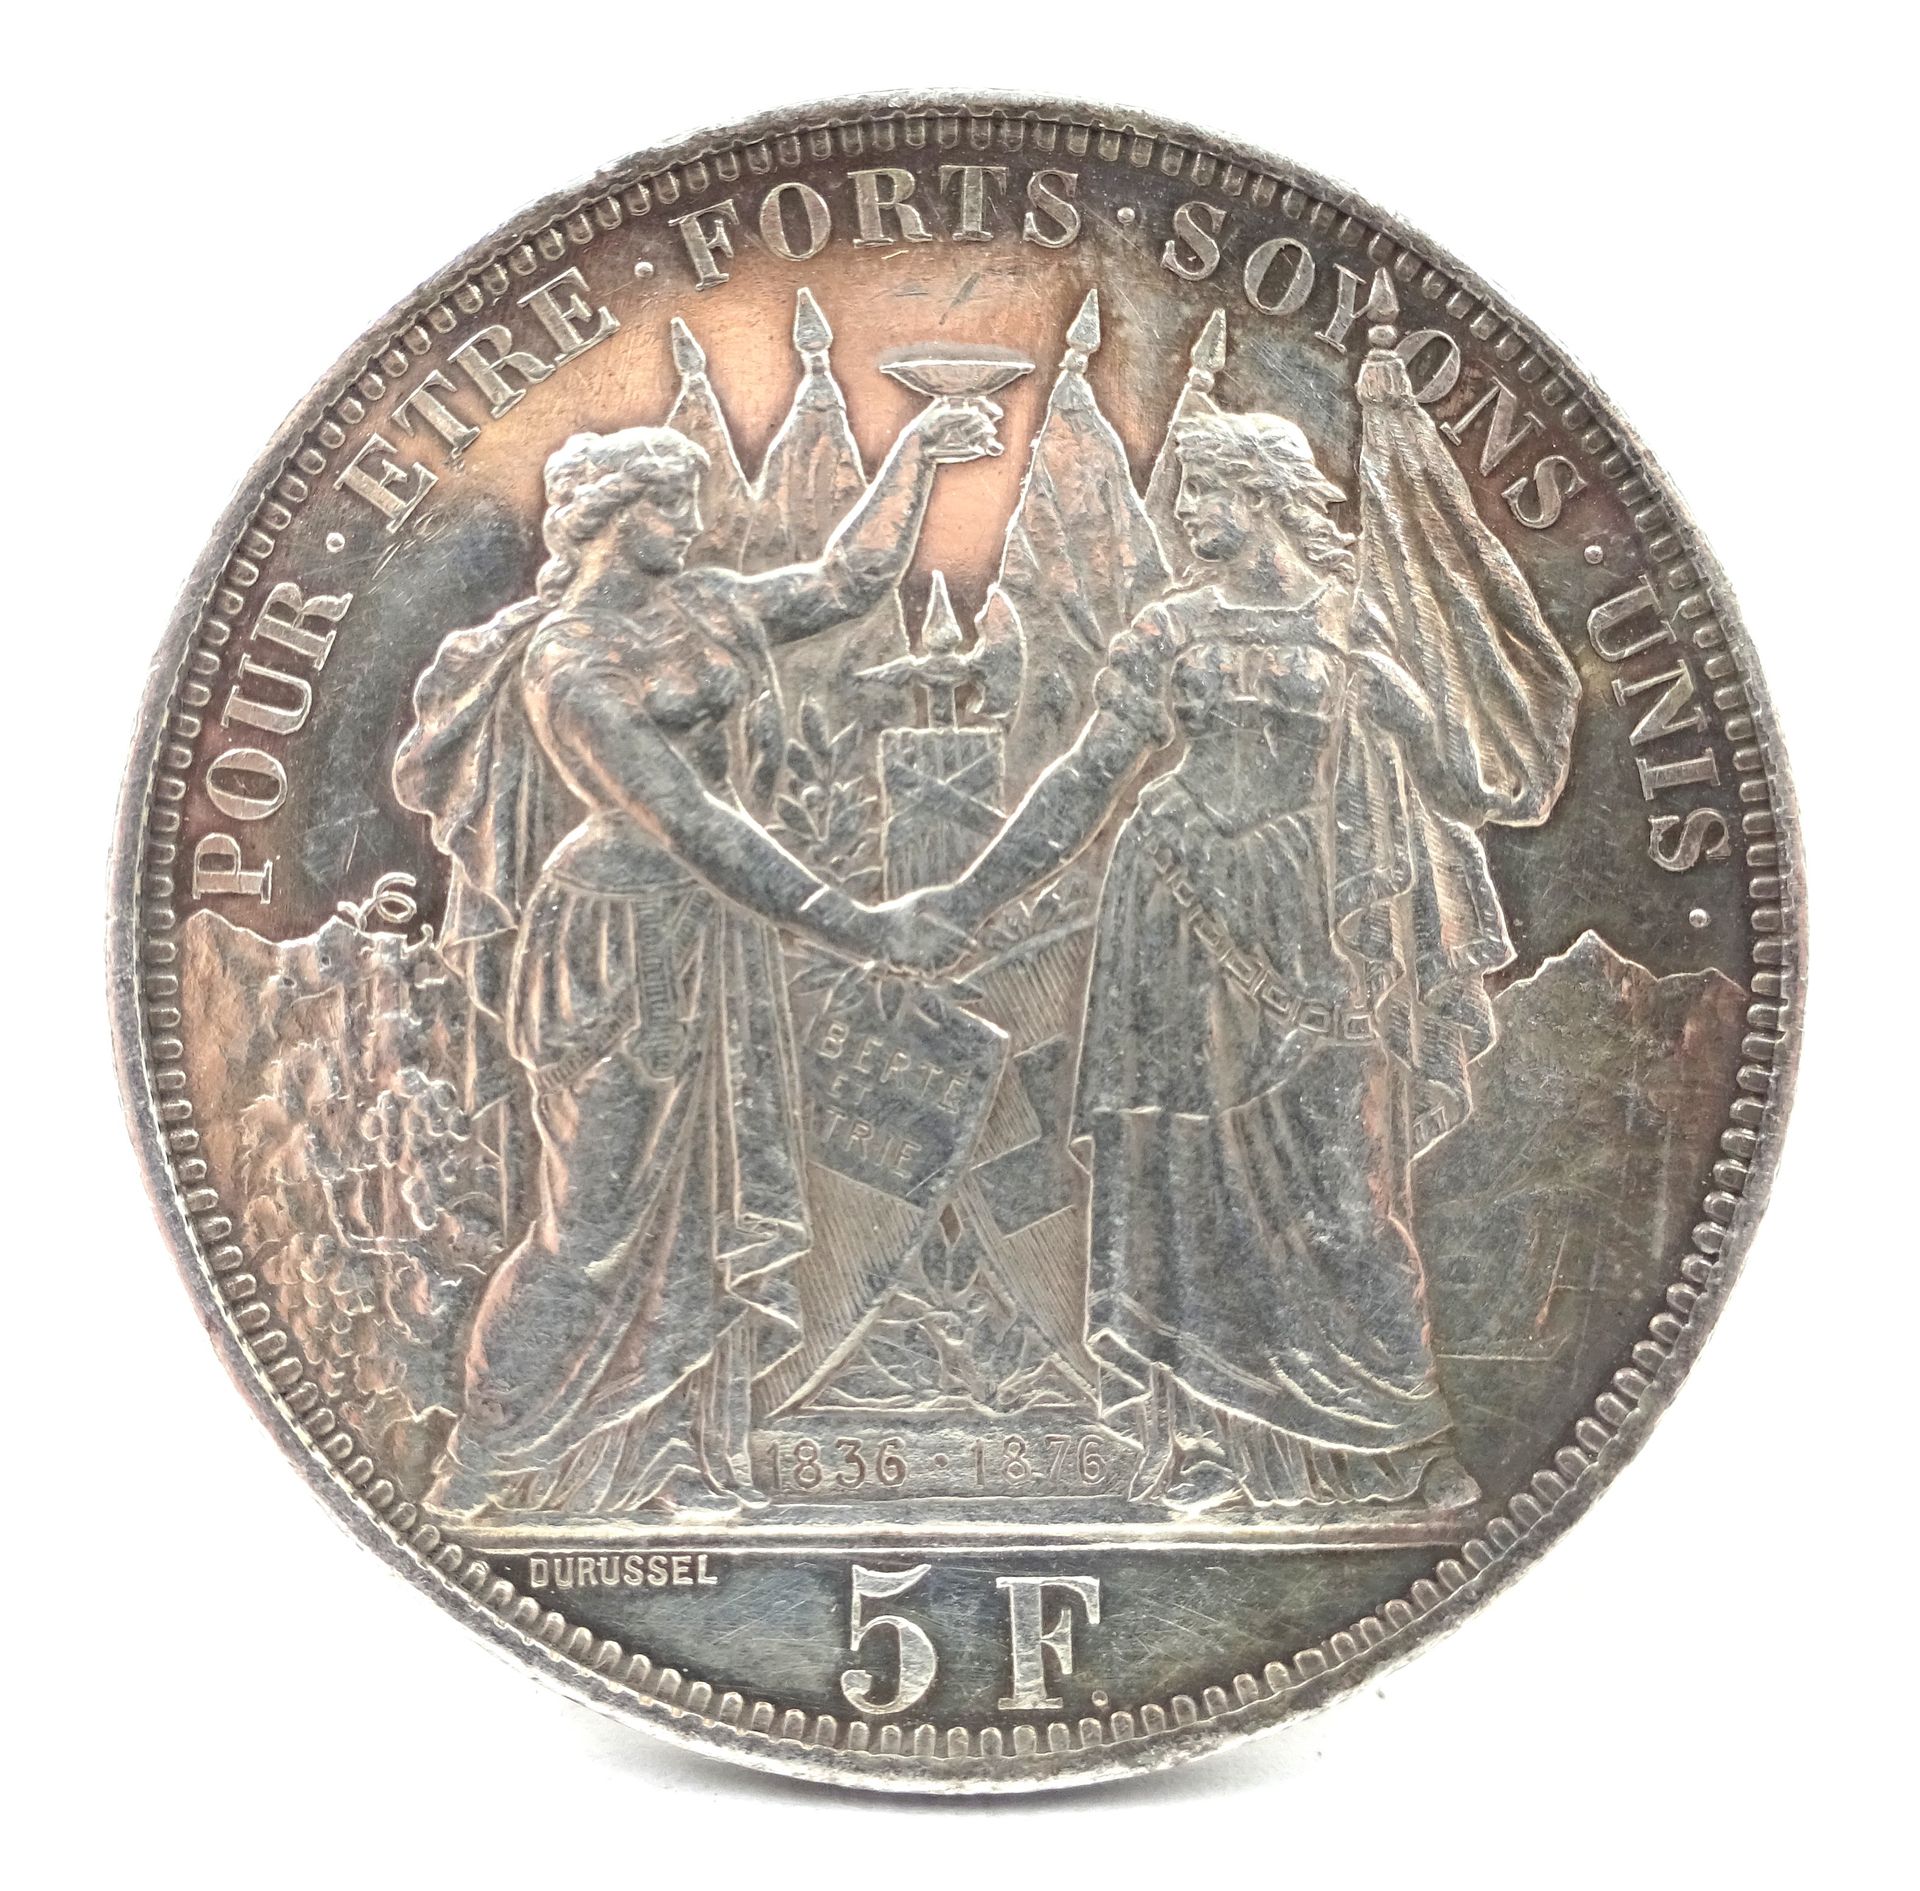 Null Moneda de plata de 5 francos suizos, Lausana, 1876. 25,00 g netos.